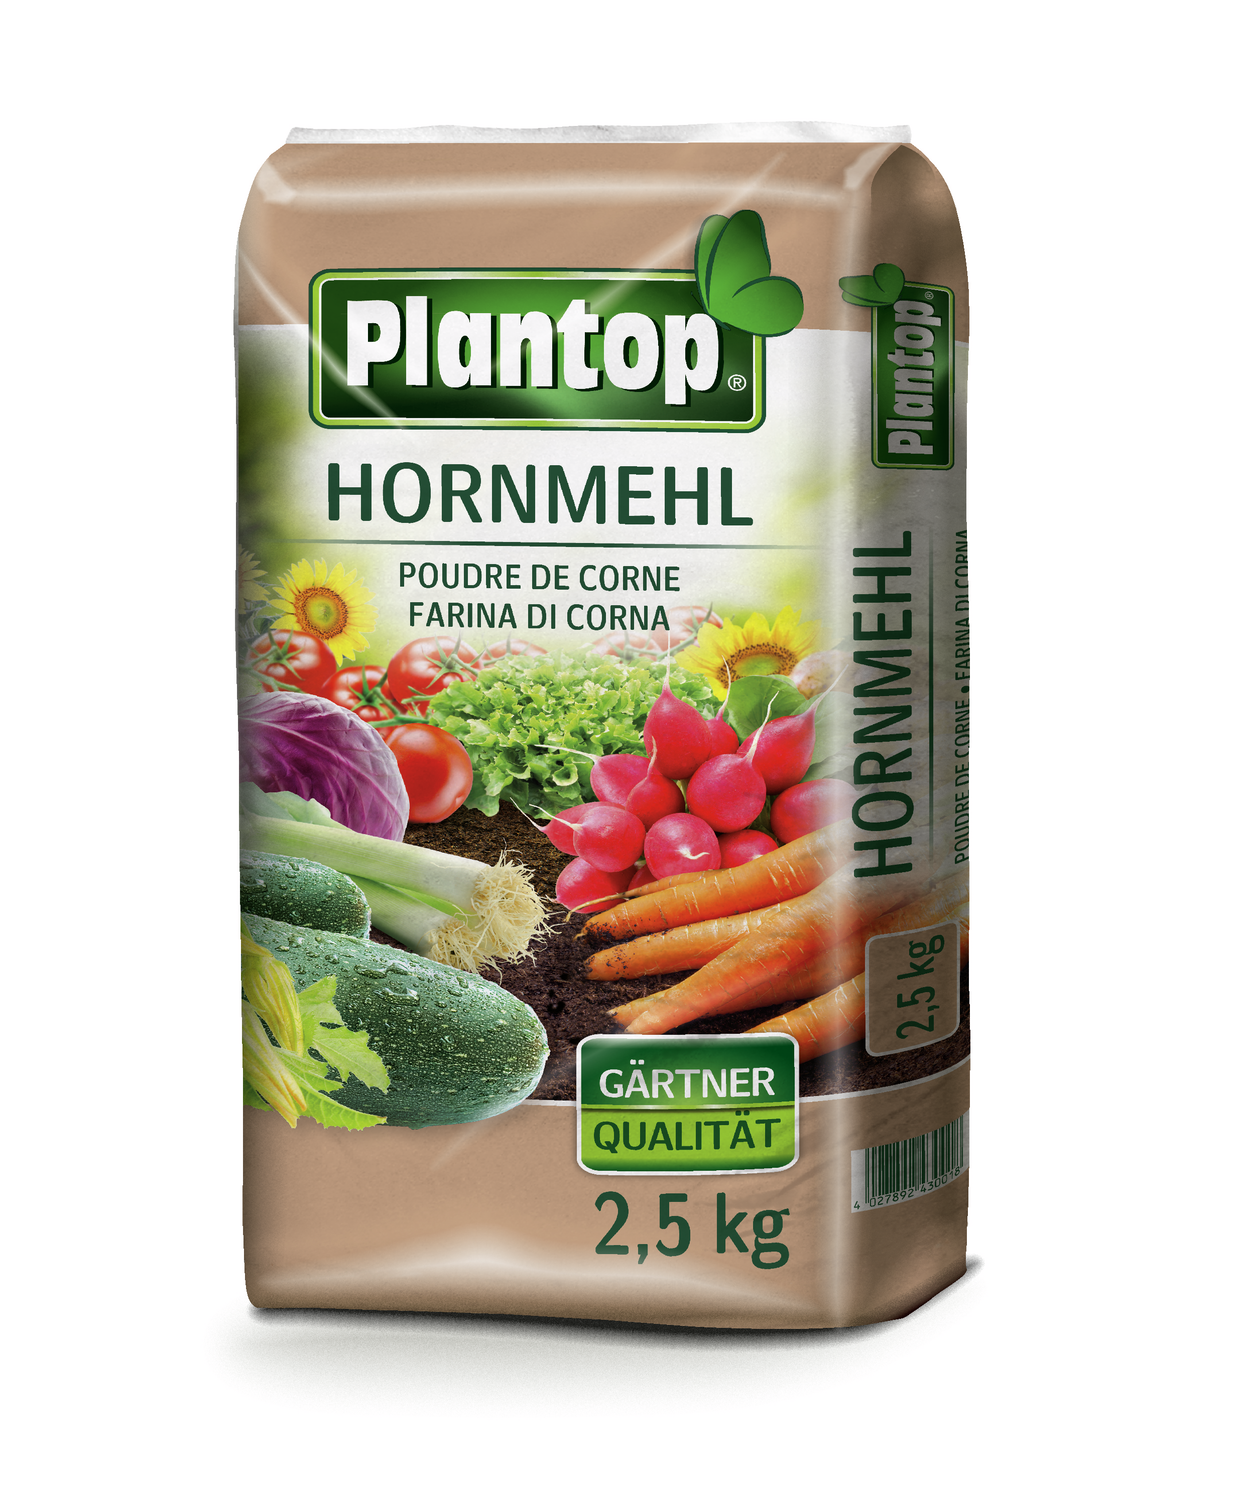 PLANTOP Hornmehl 2,5 kg 